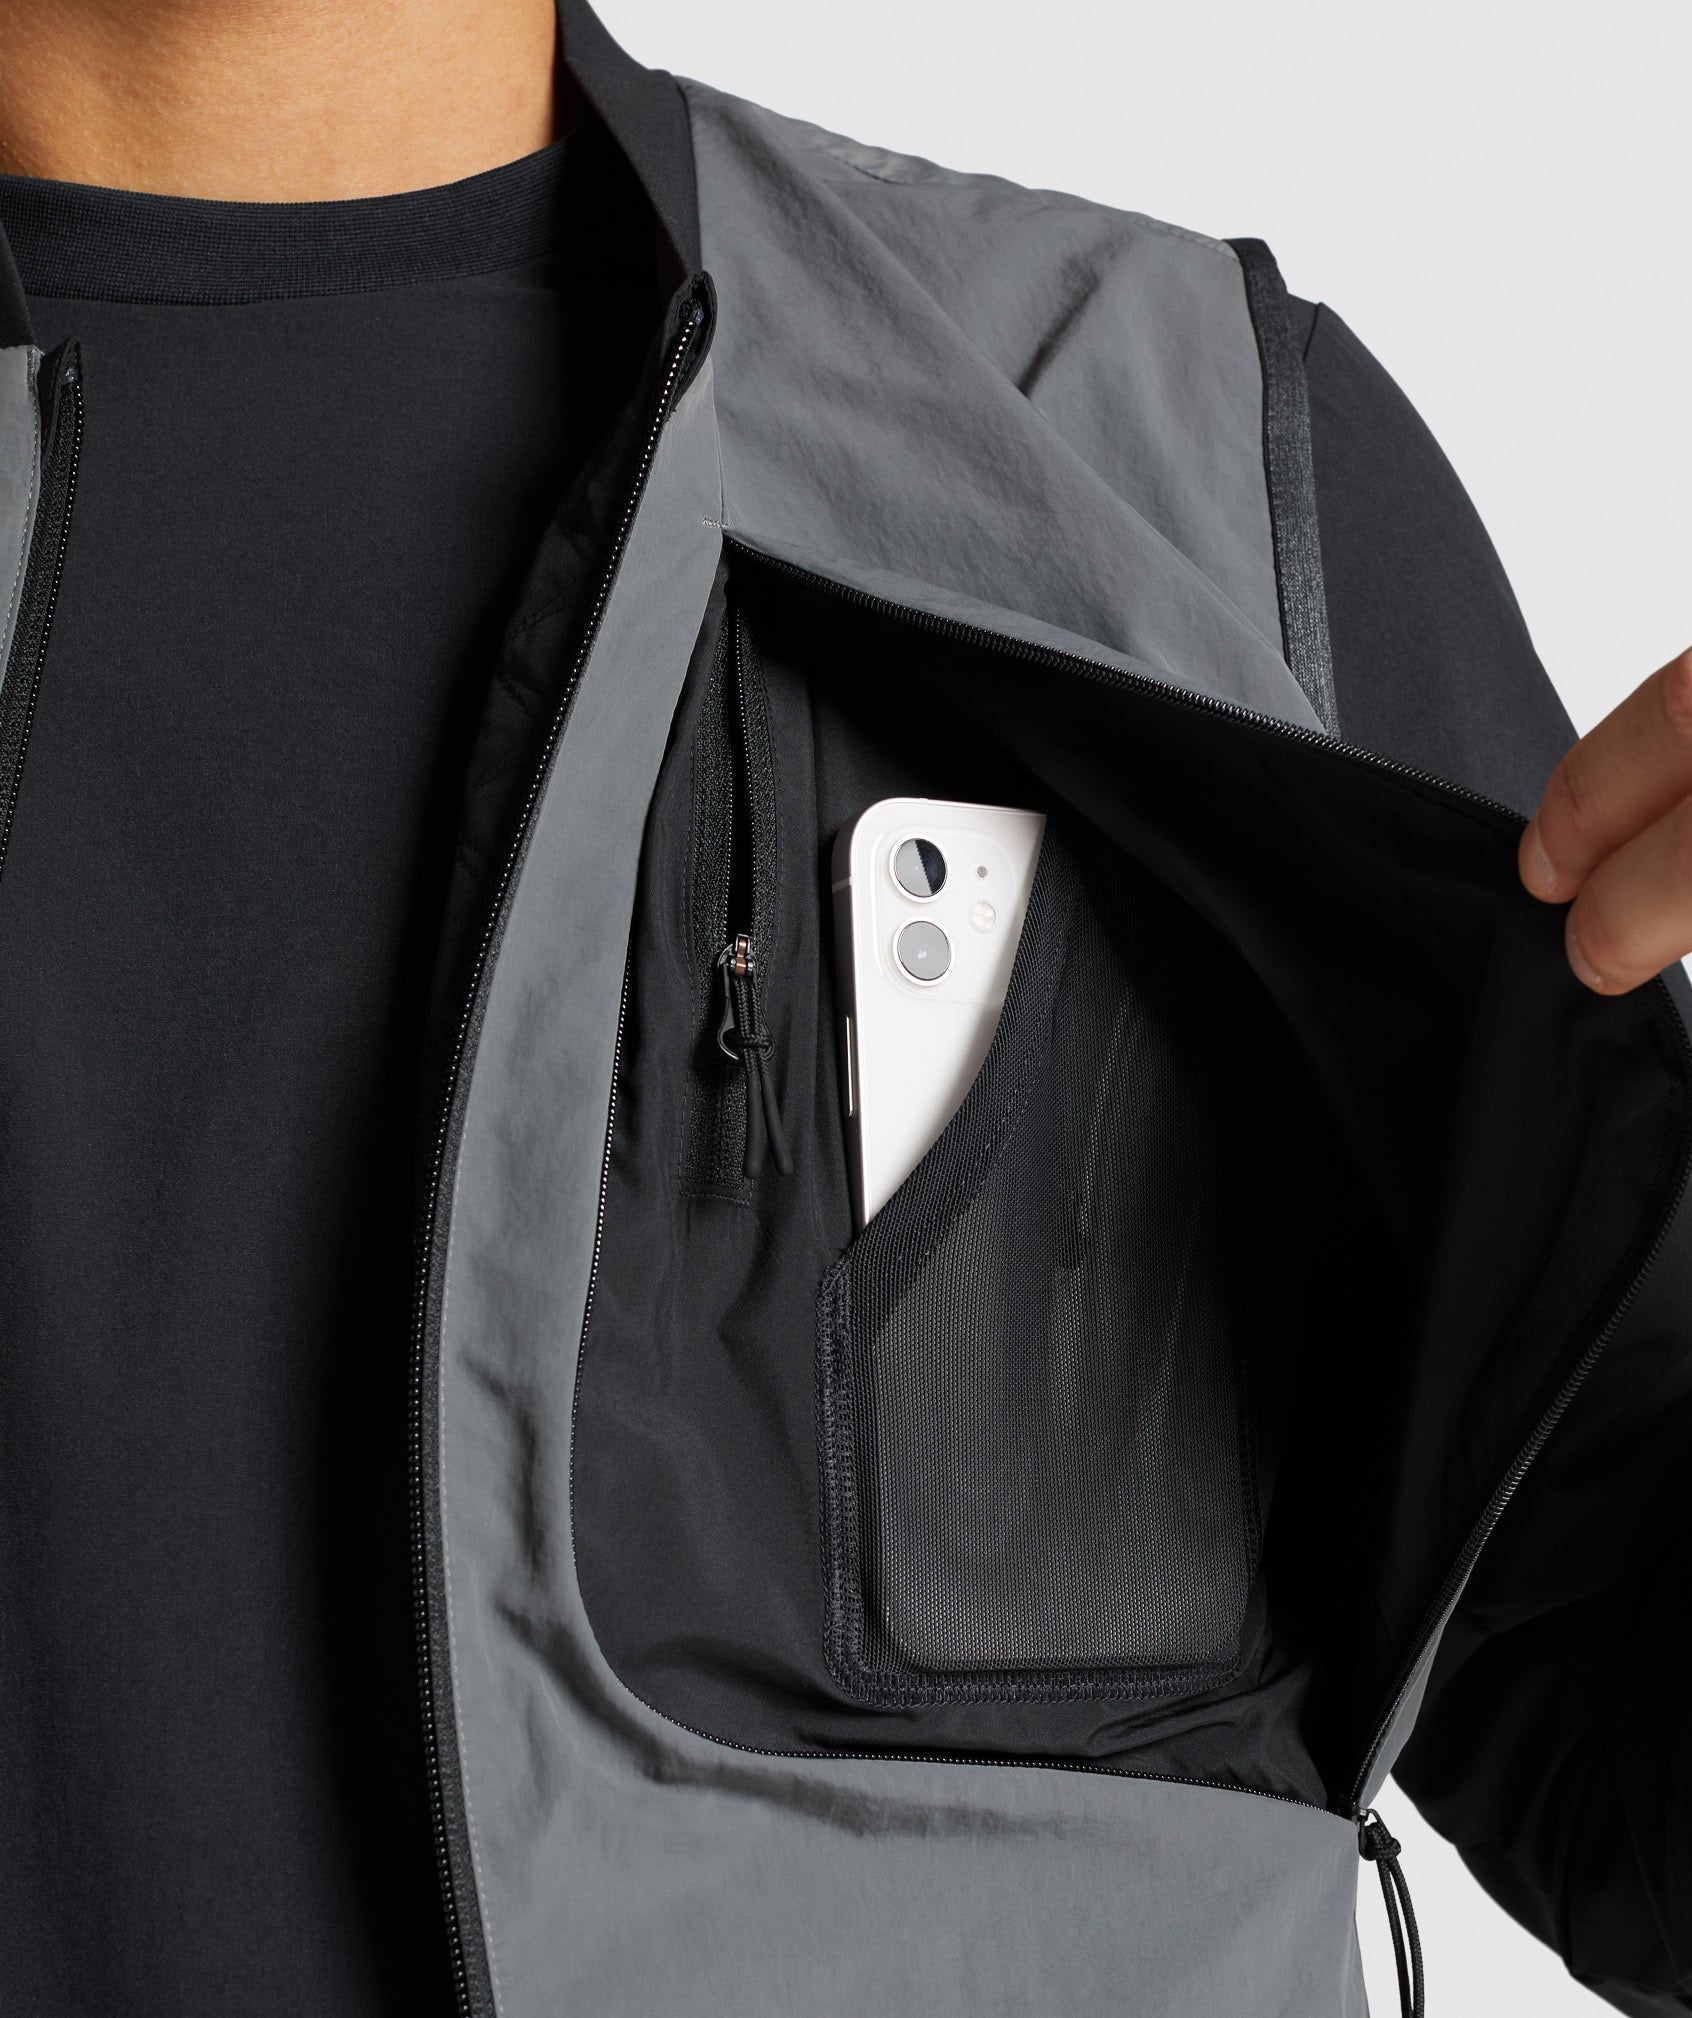 Retake Reversible Vest in Charcoal/Black - view 7